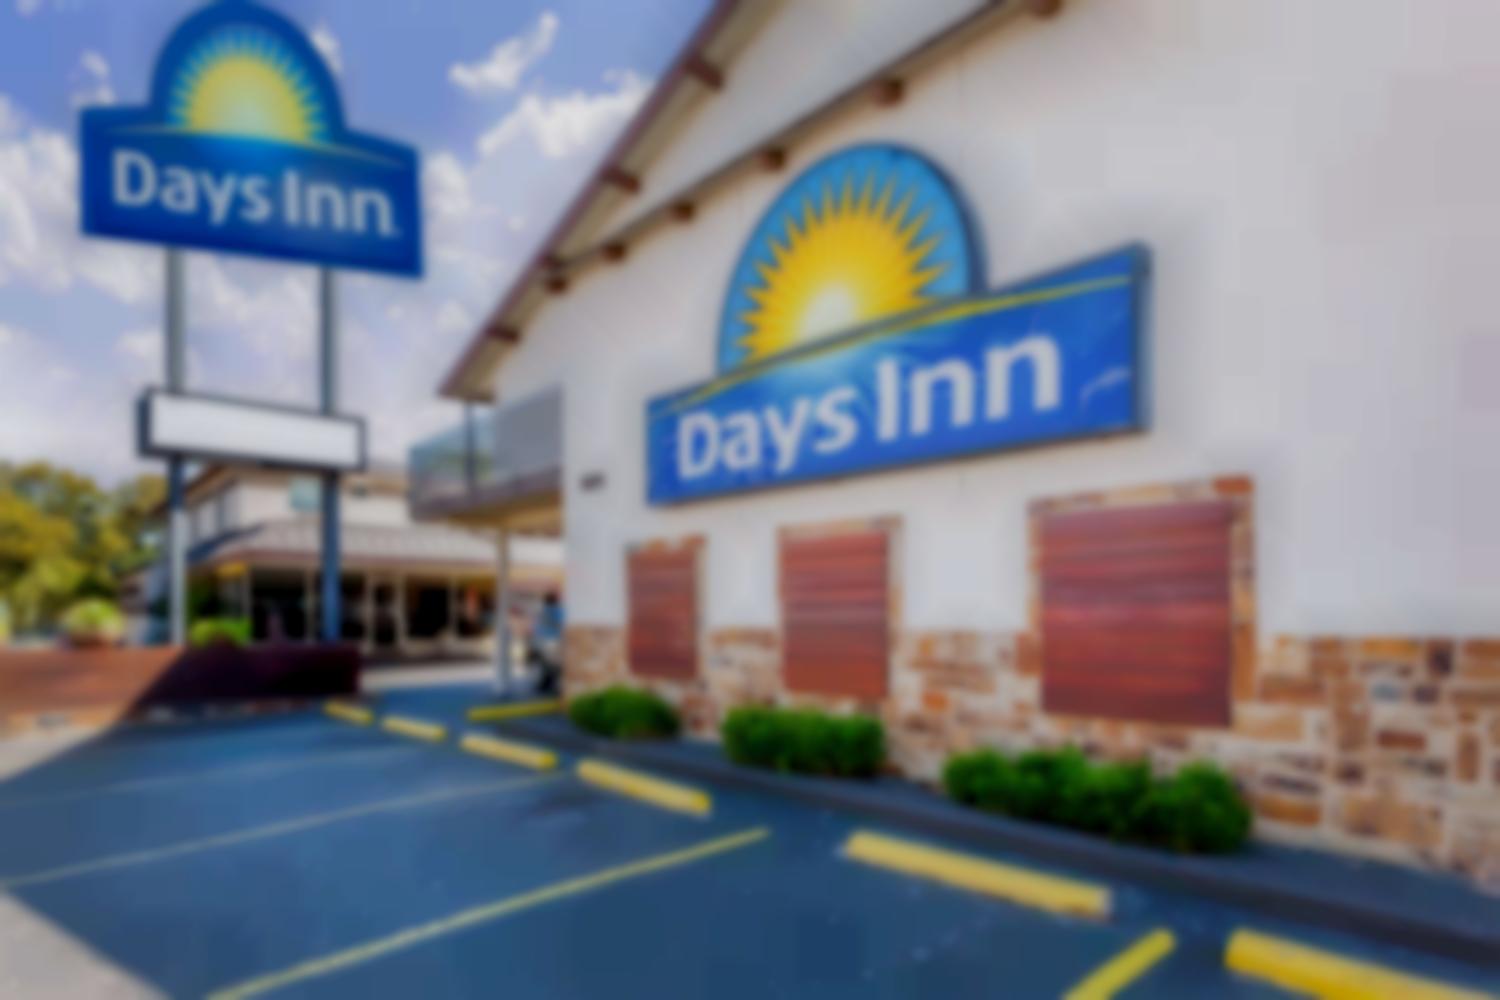 Days Inn by Wyndham Austin/University/Downtown